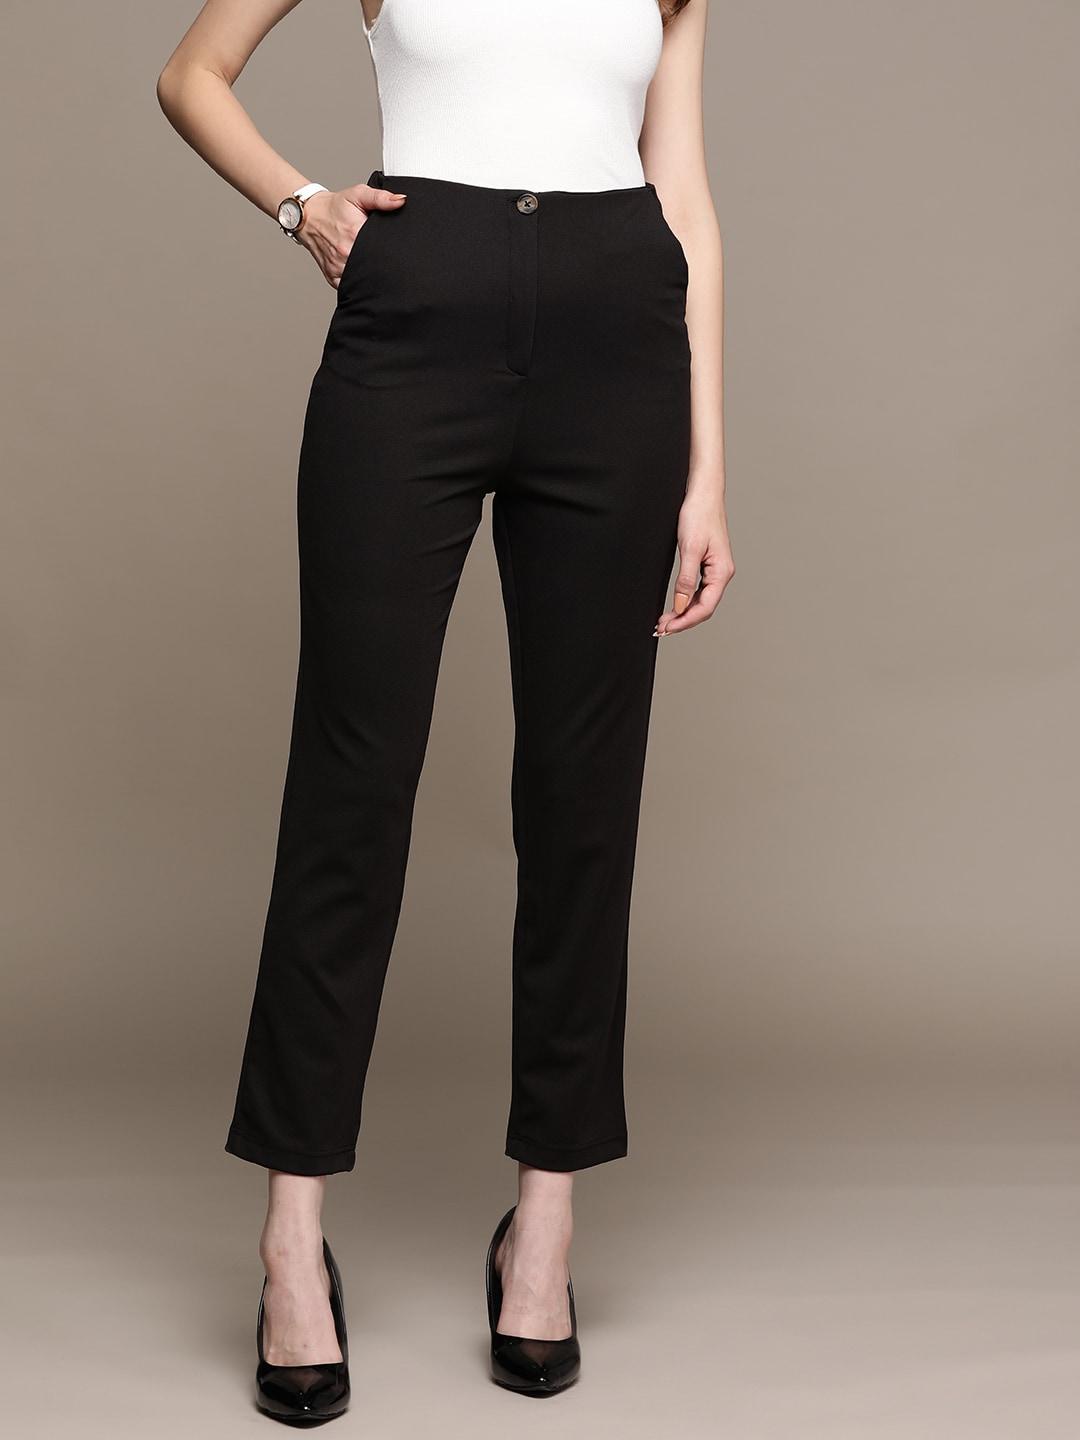 bebe women black solid regular mid-rise formal trousers